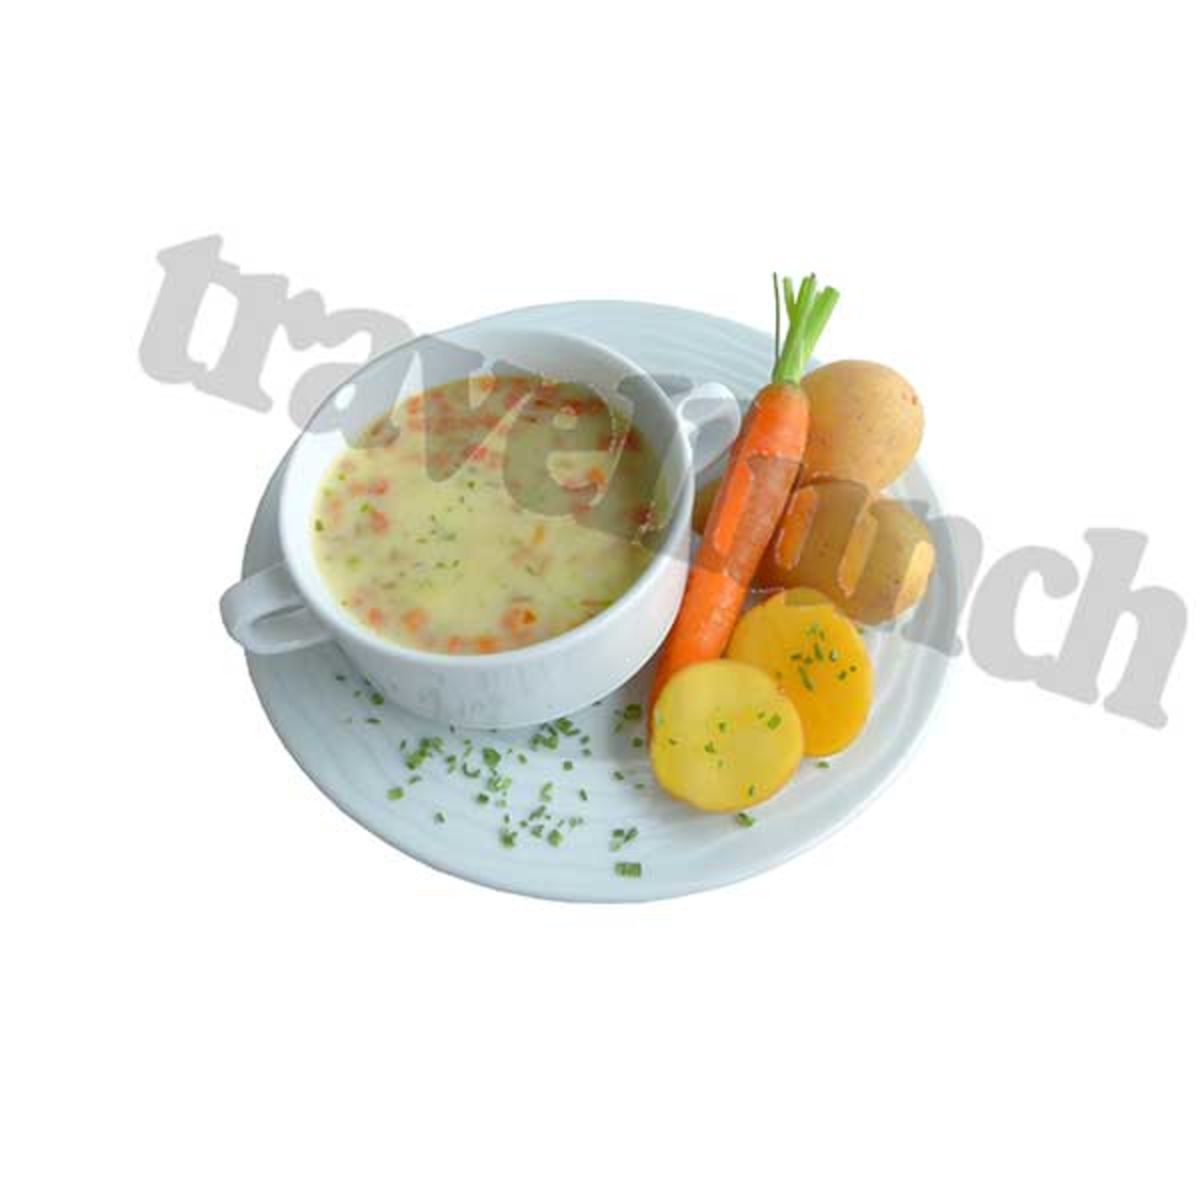 Cream of potato soup - Double serving